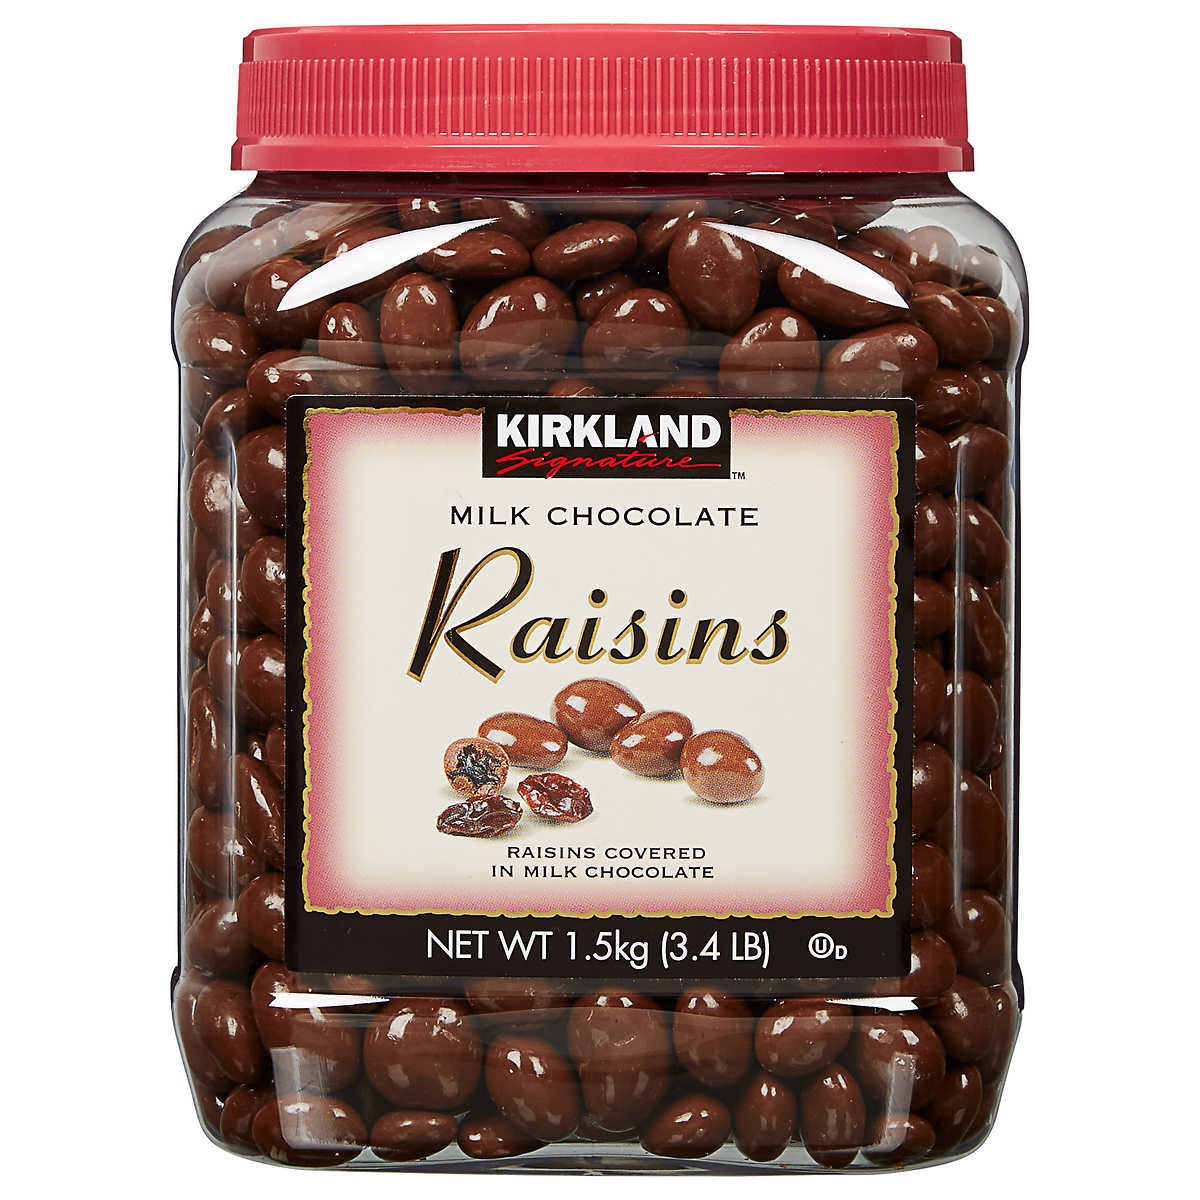 Best Kirkland Signature Raisins, Milk Chocolate, 3.4 lb